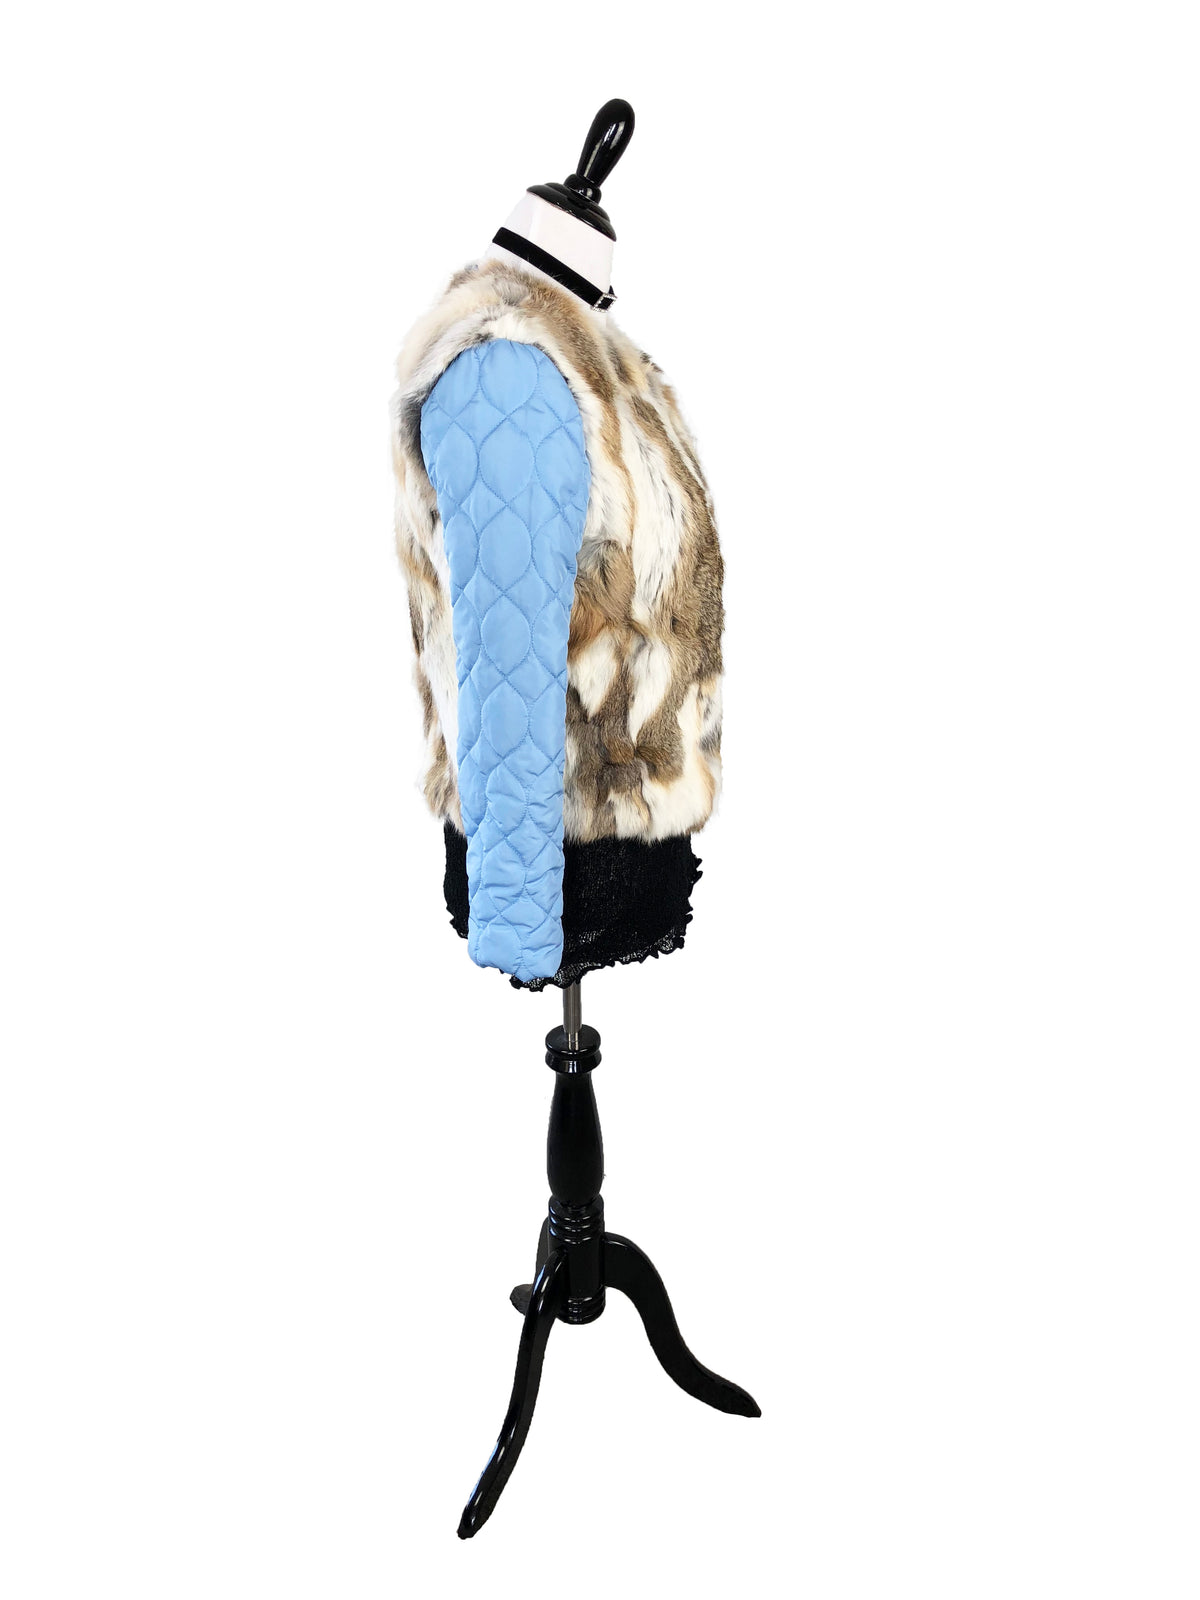 Denim and Fox Fur Jacket with Detachable Rabbit Fur Interior - paulamariecollection